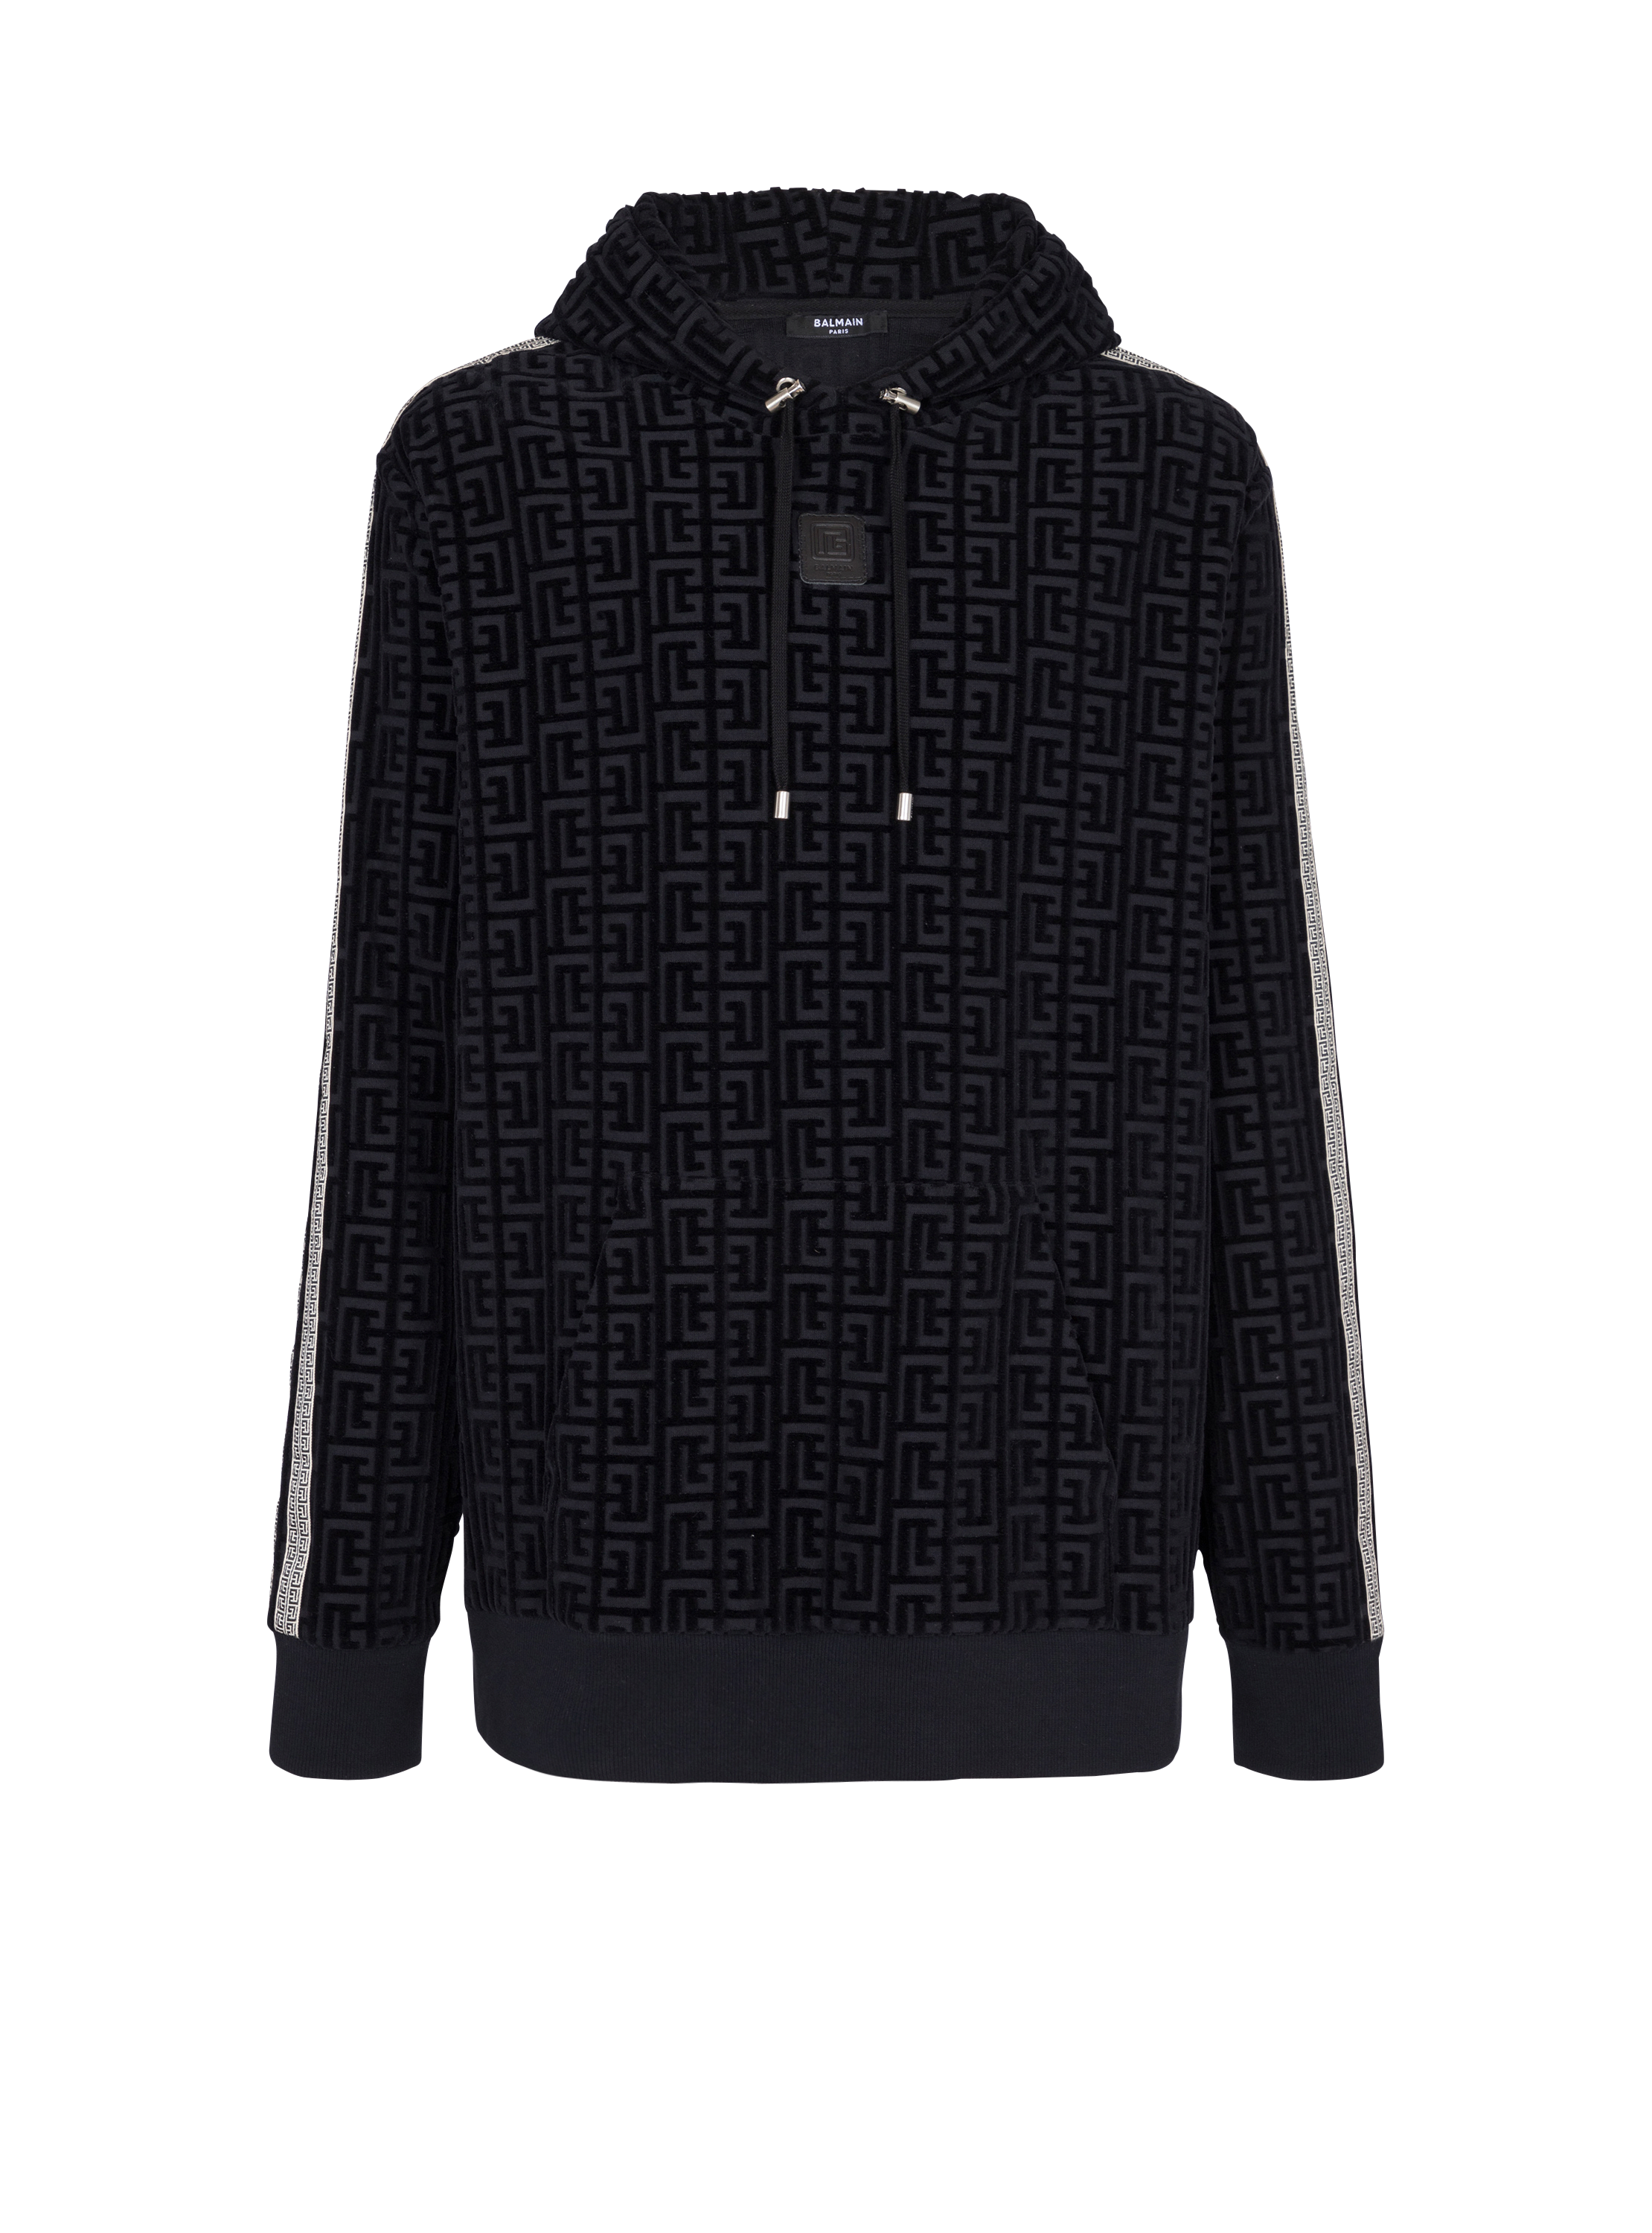 Monogrammed velvet hooded sweatshirt, navy, hi-res